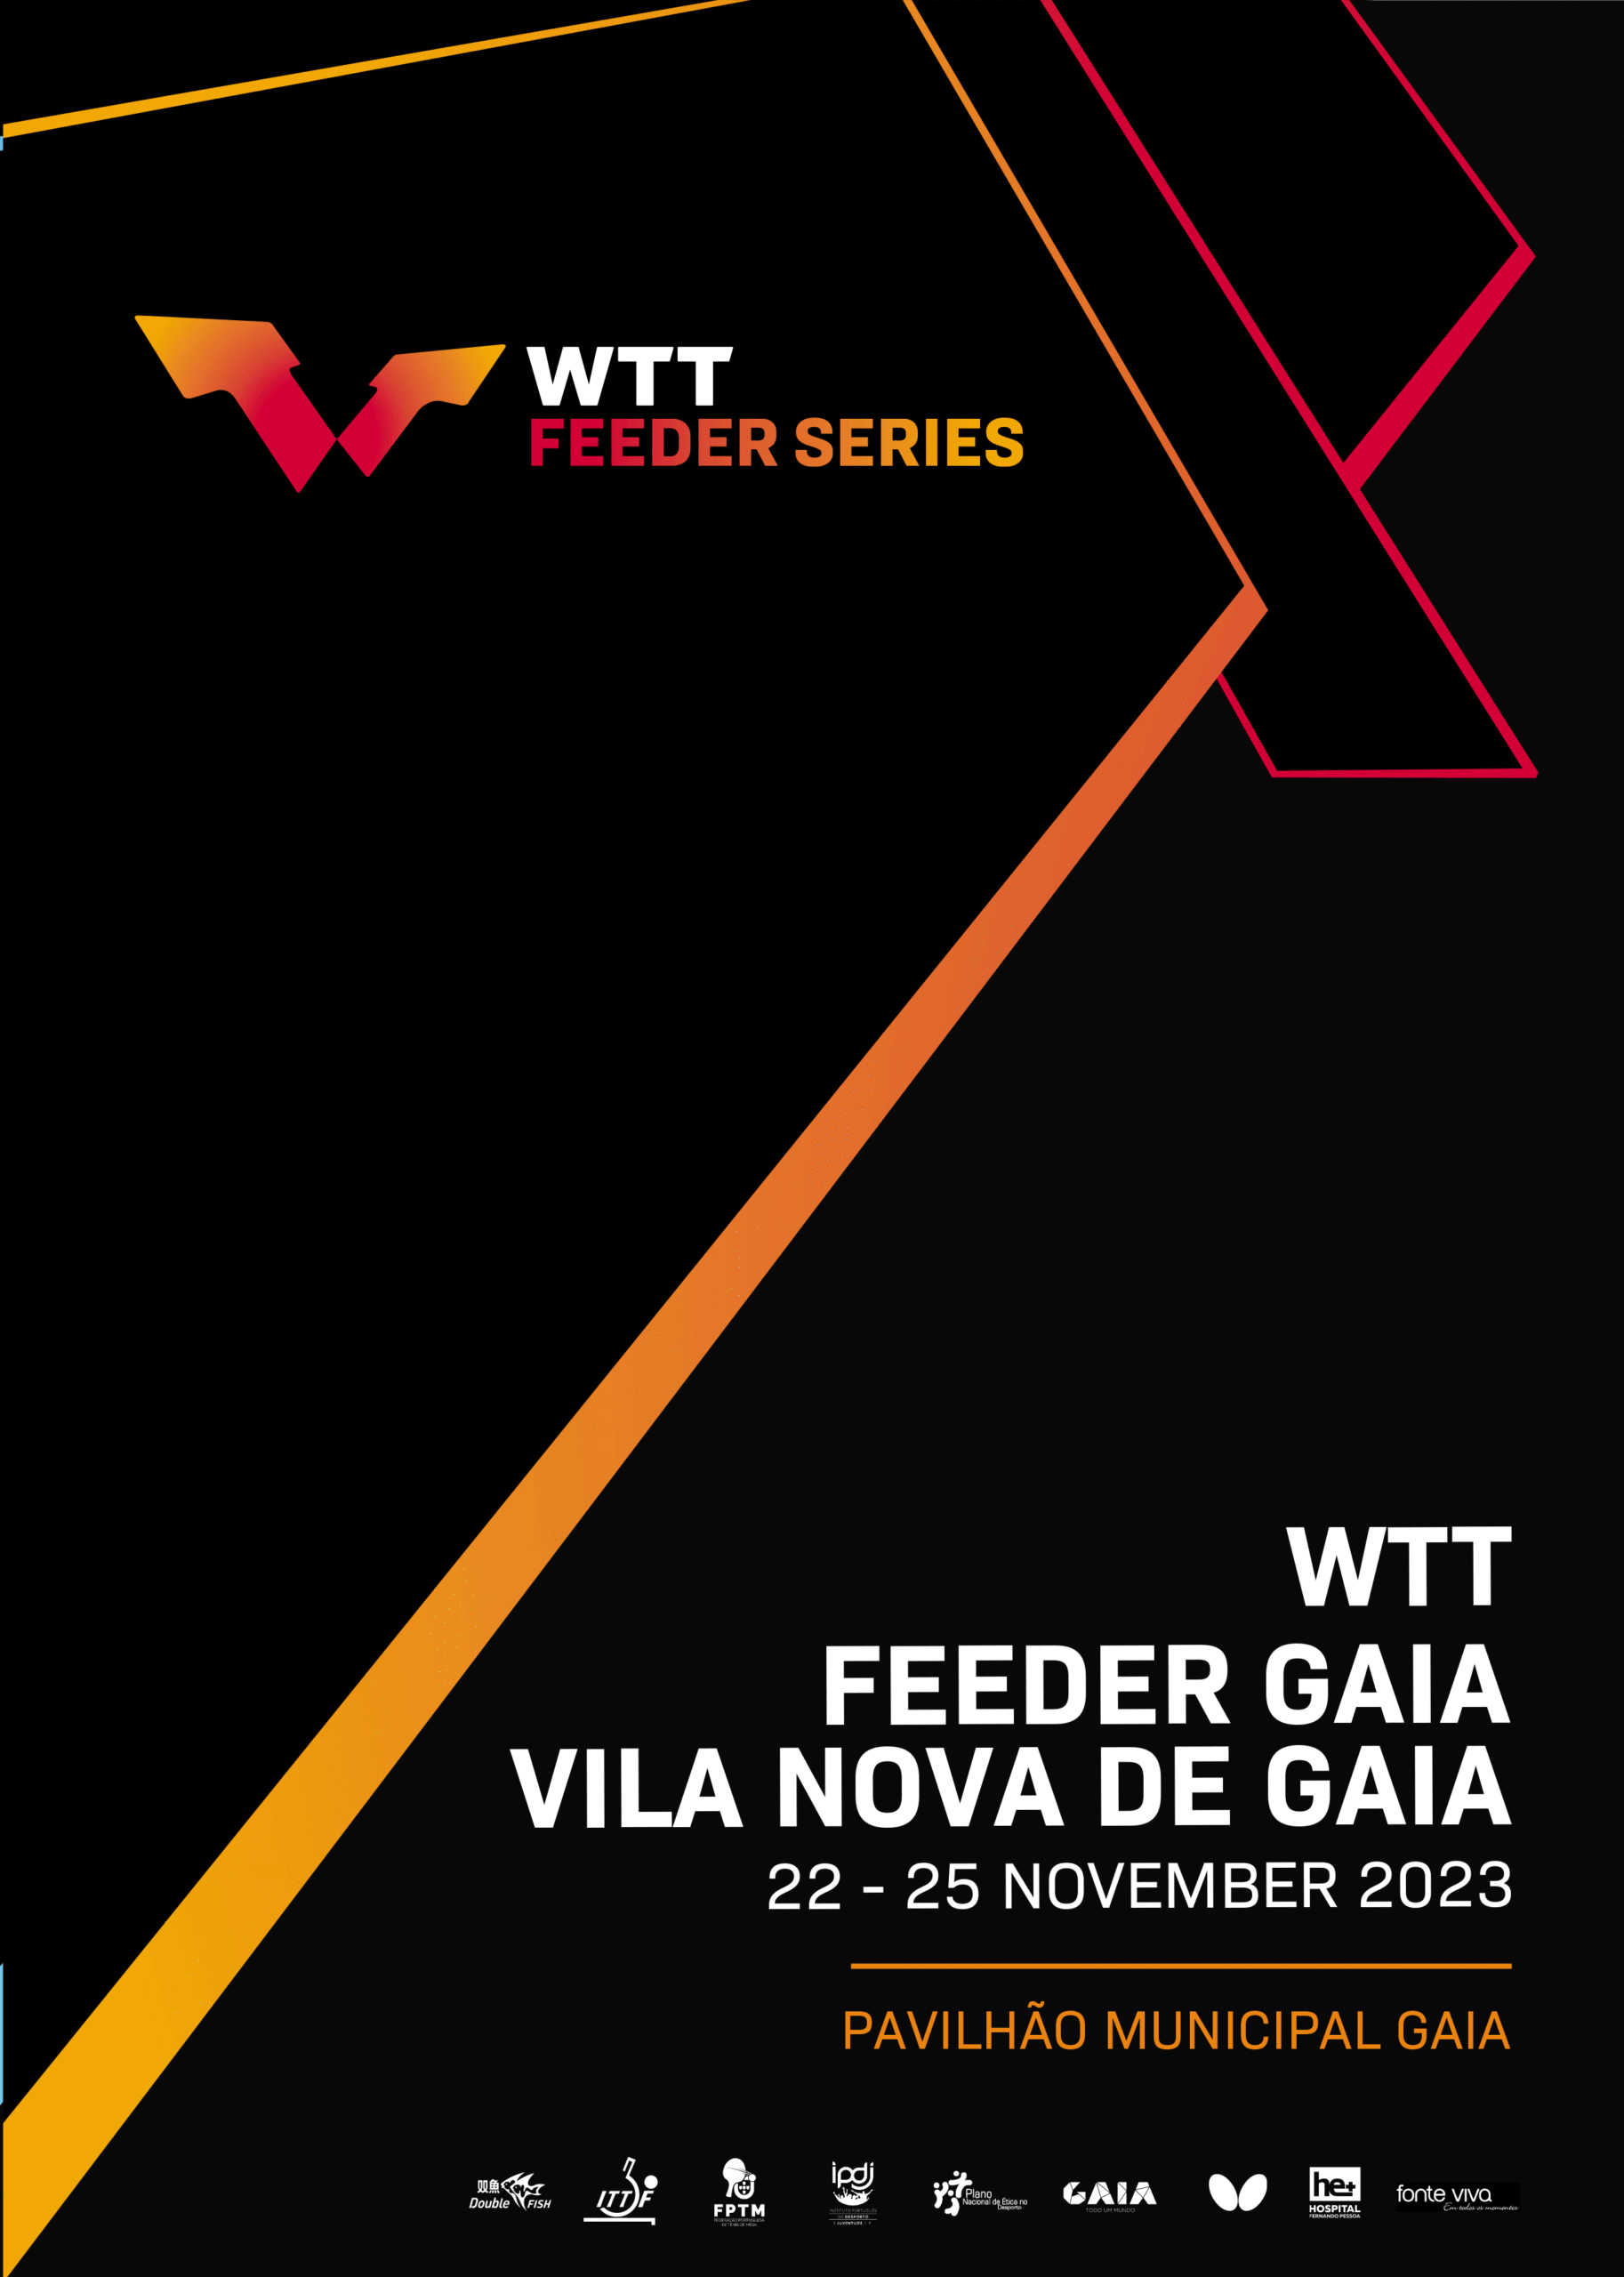 WTT Feeder Vila Nova de Gaia recebe olímpicos portugueses